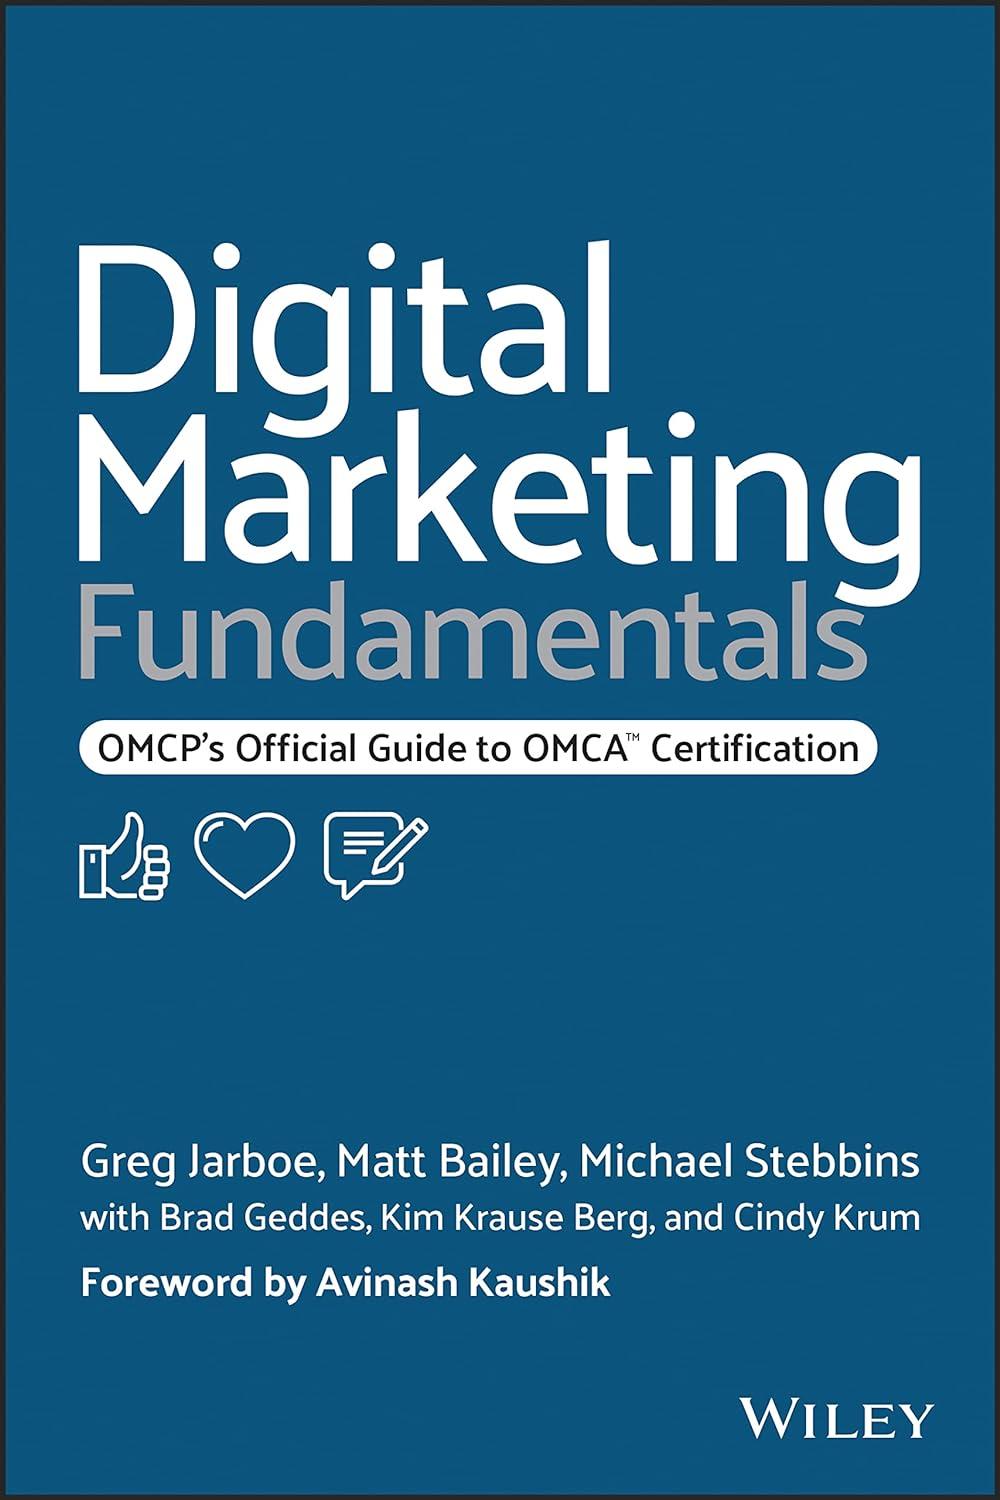 digital marketing fundamentals omcps official guide to omca certification 10th edition greg jarboe , matt